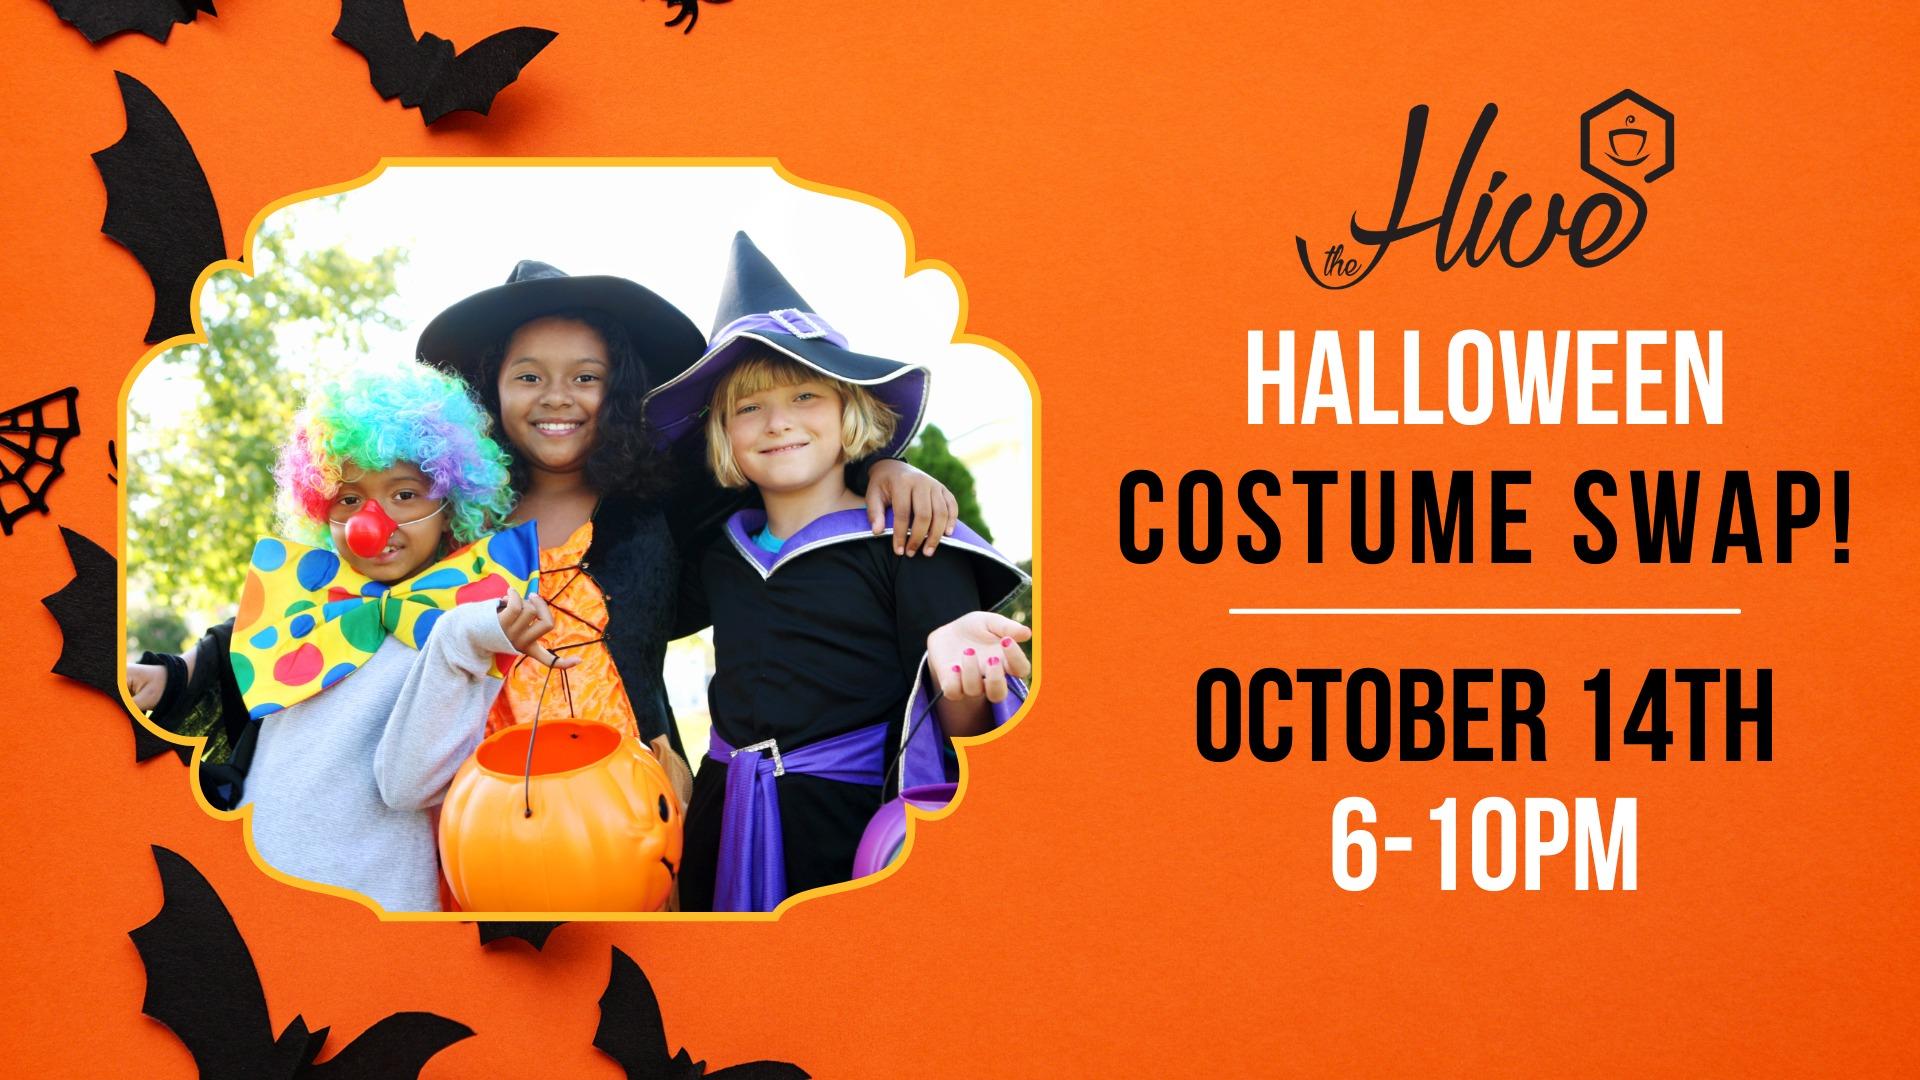 Halloween Costume Swap
Fri Oct 14, 6:00 PM - Fri Oct 14, 10:00 PM